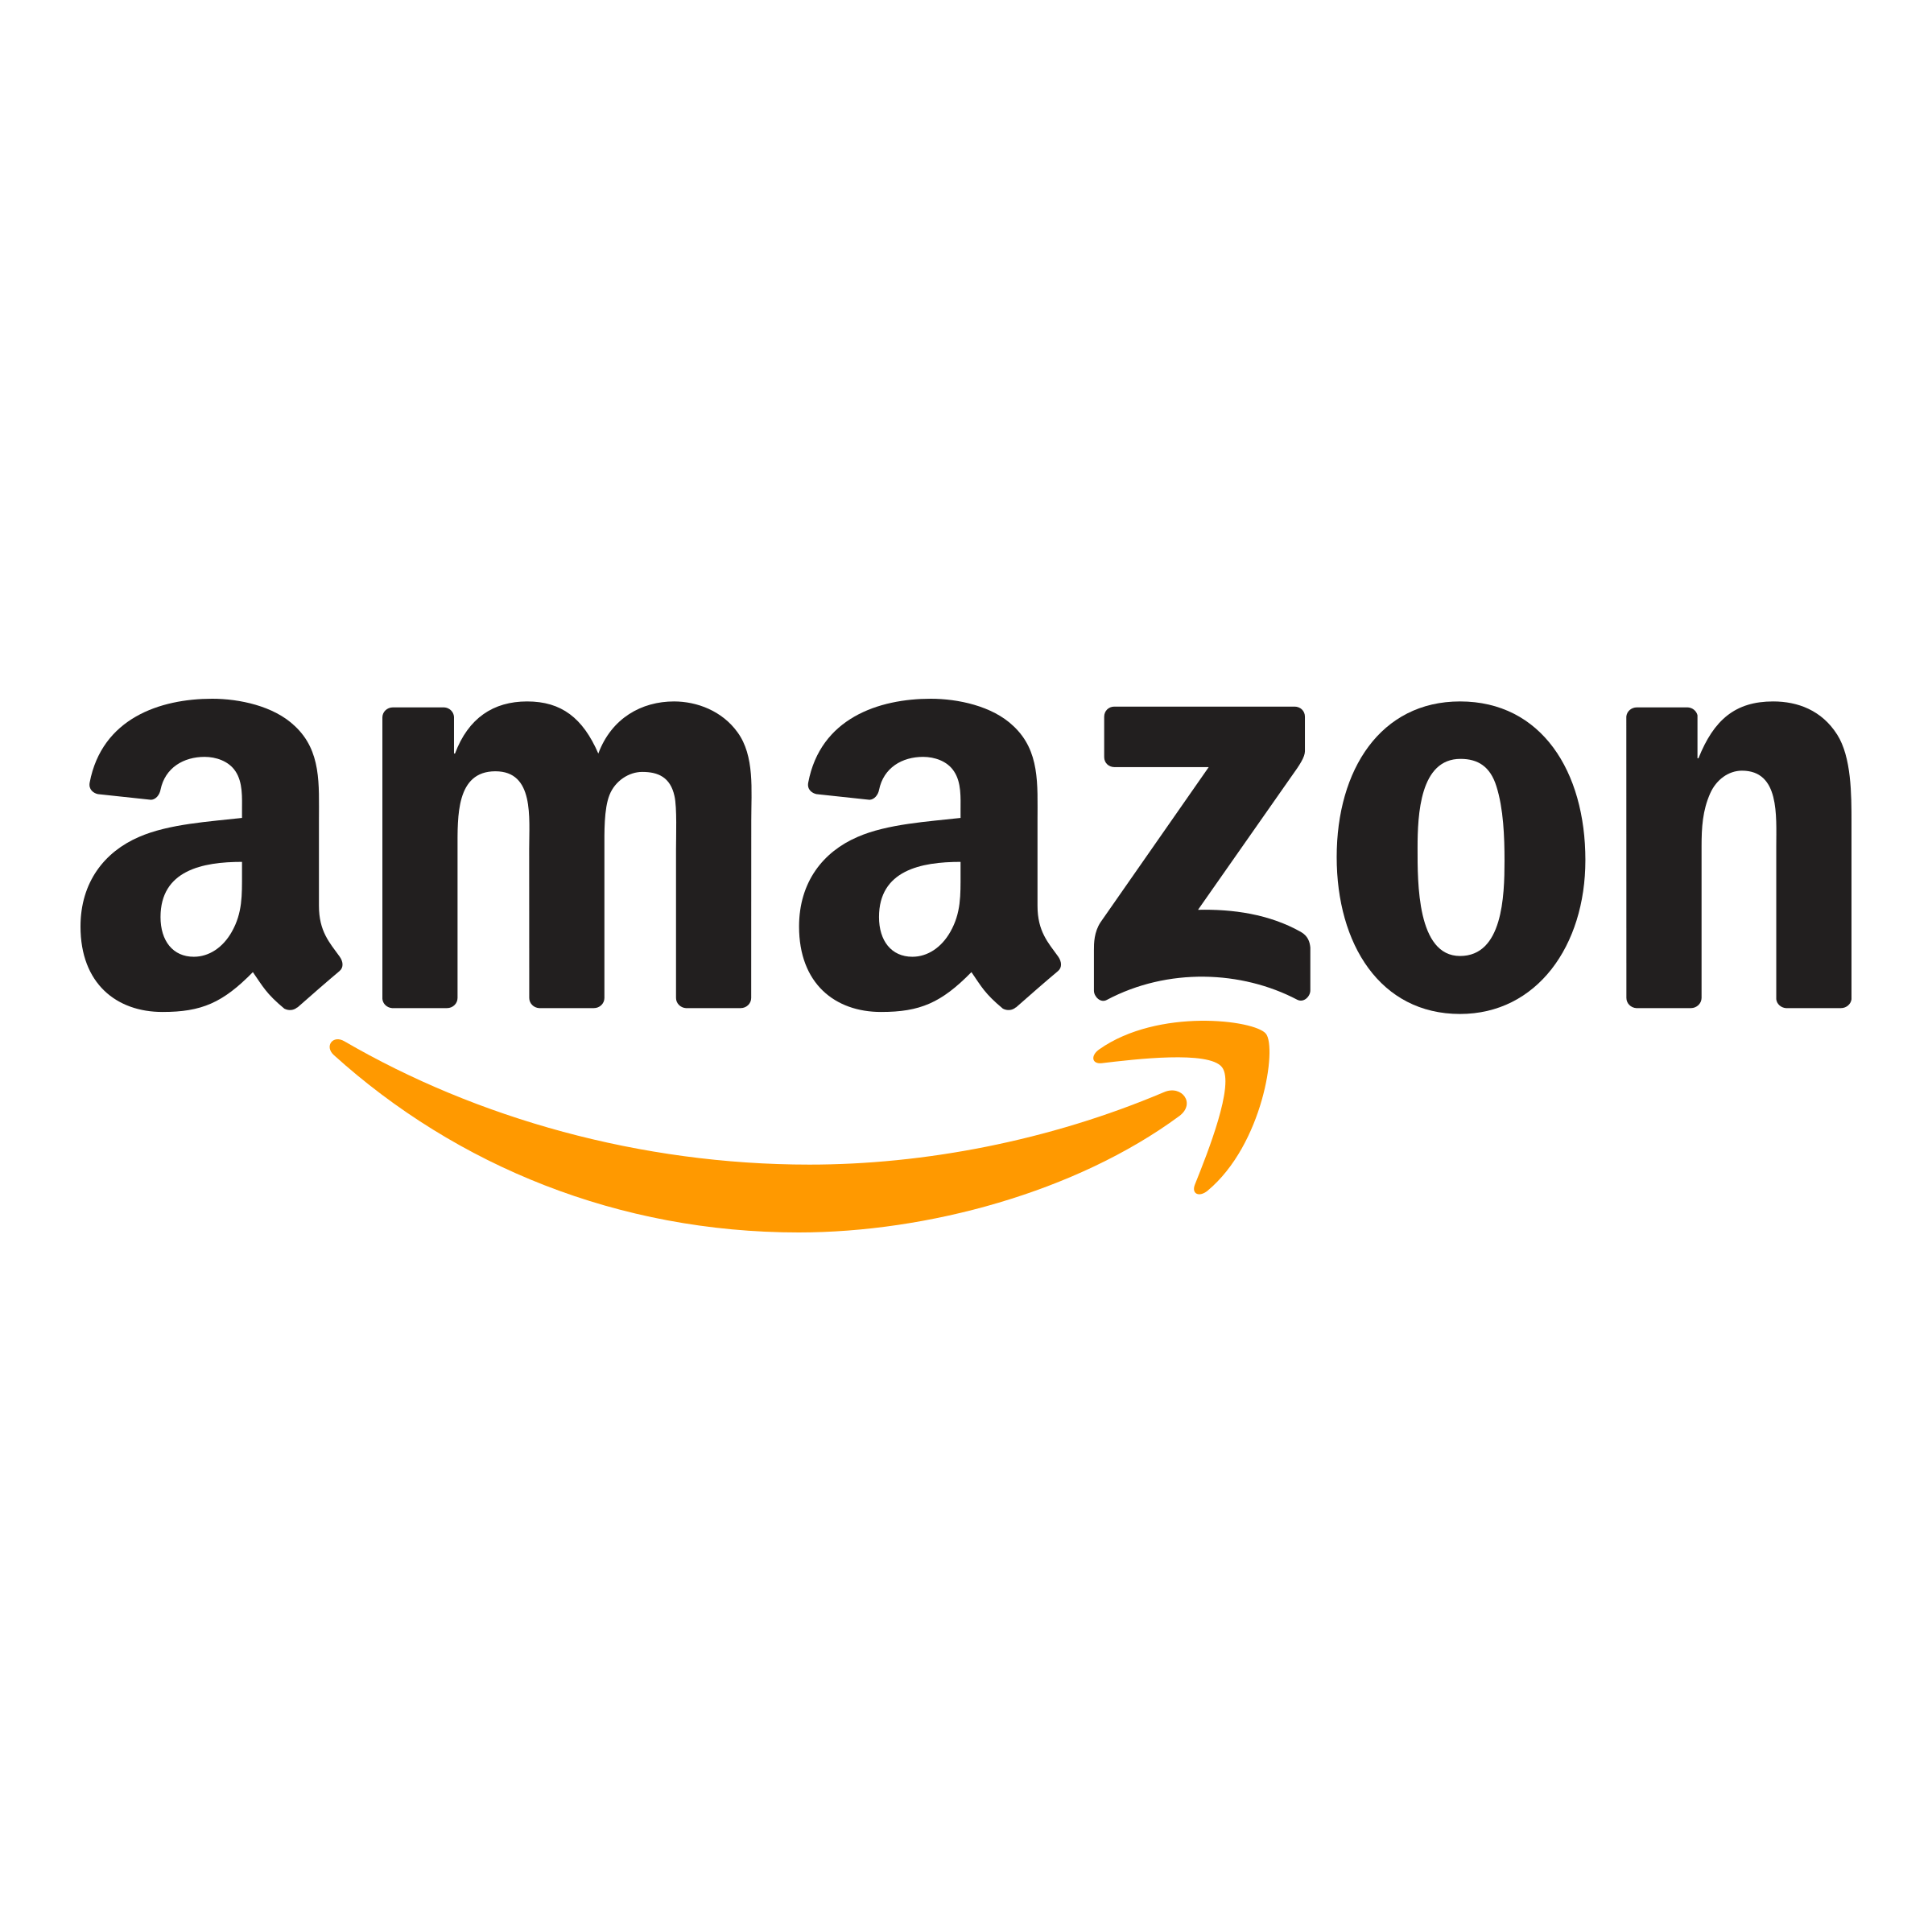 https://warrenenskat.com/wp-content/uploads/2019/01/Logo-Amazon.png